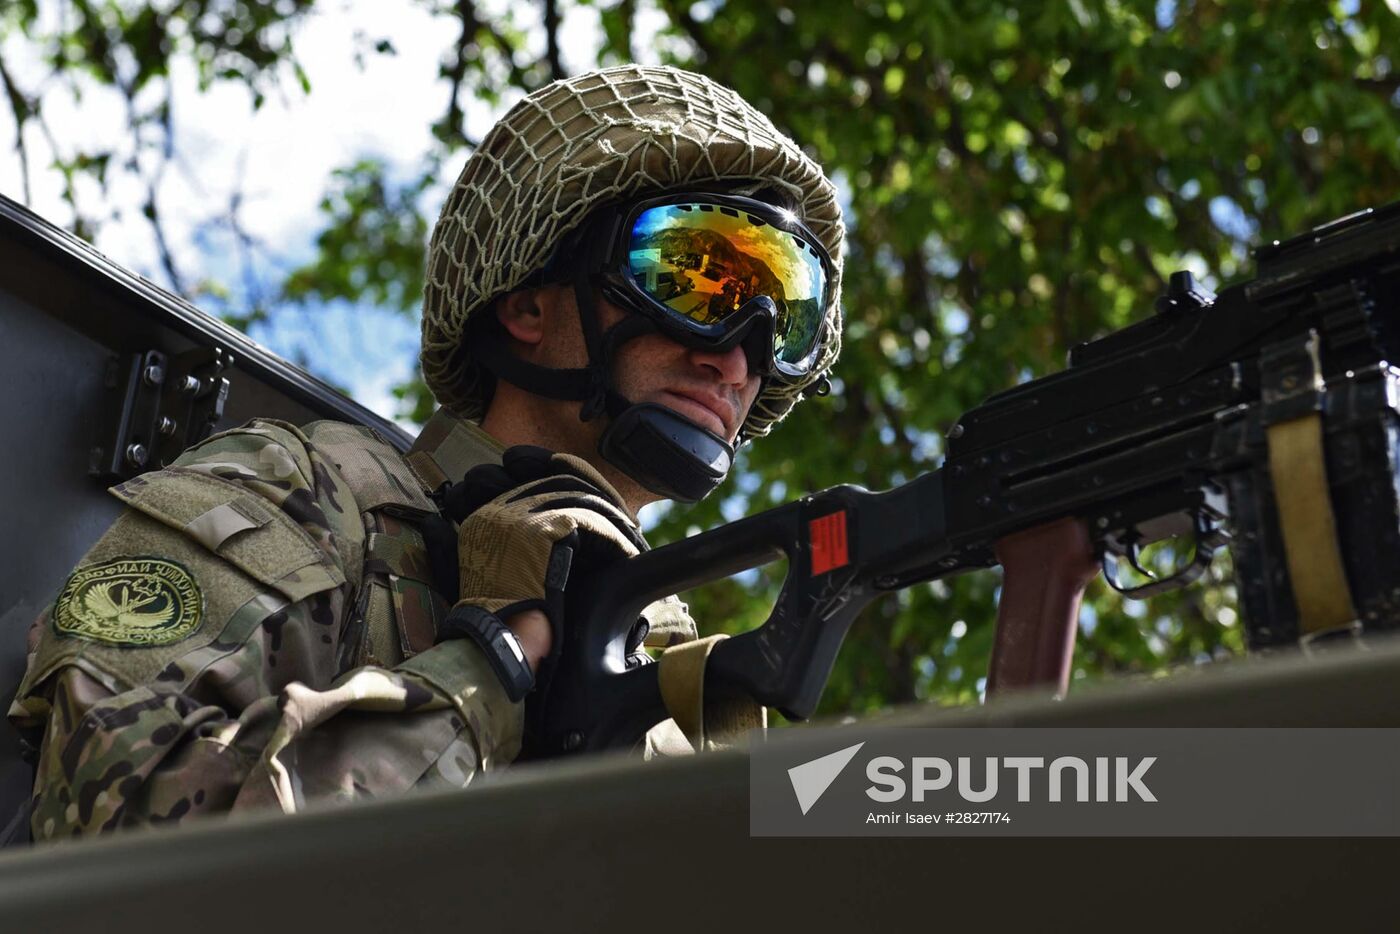 Poisk-2016 exercises of CSTO reconnaissance forces